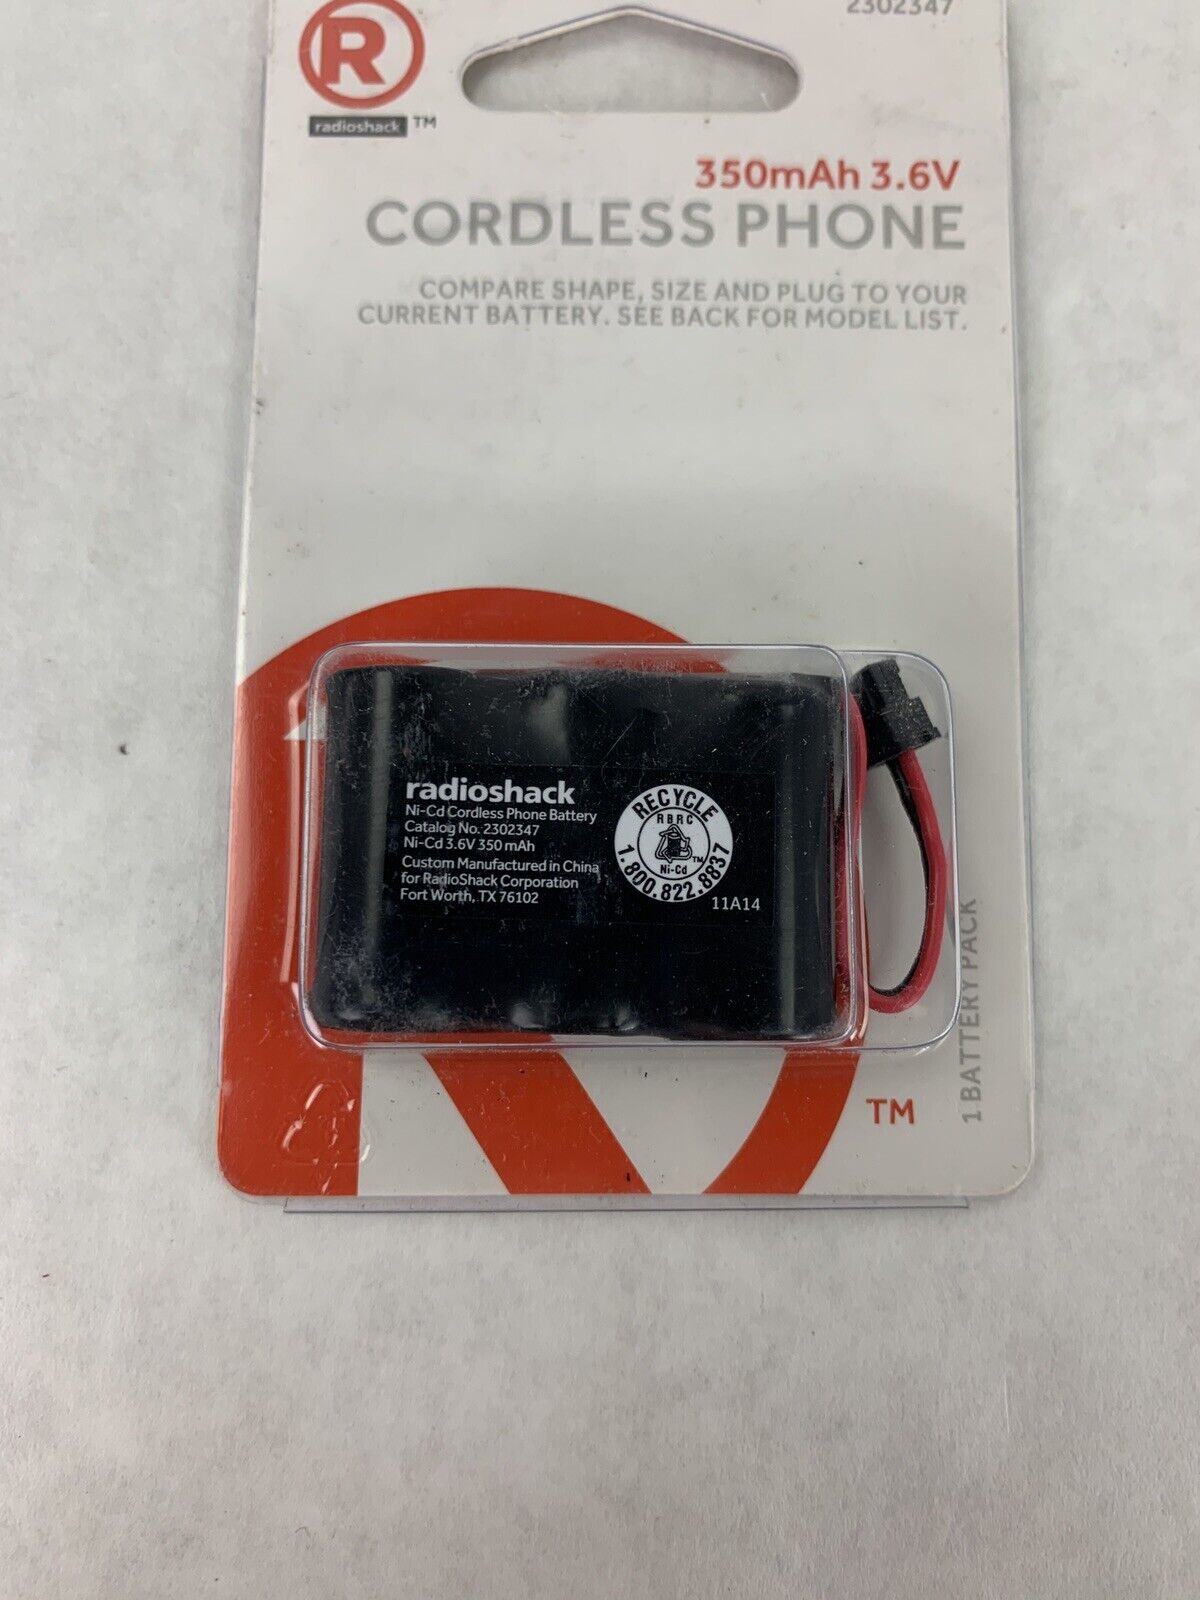 New OEM RadioShack 350Ah 3.6V Ni-MH Cordless Phone Battery 2302347